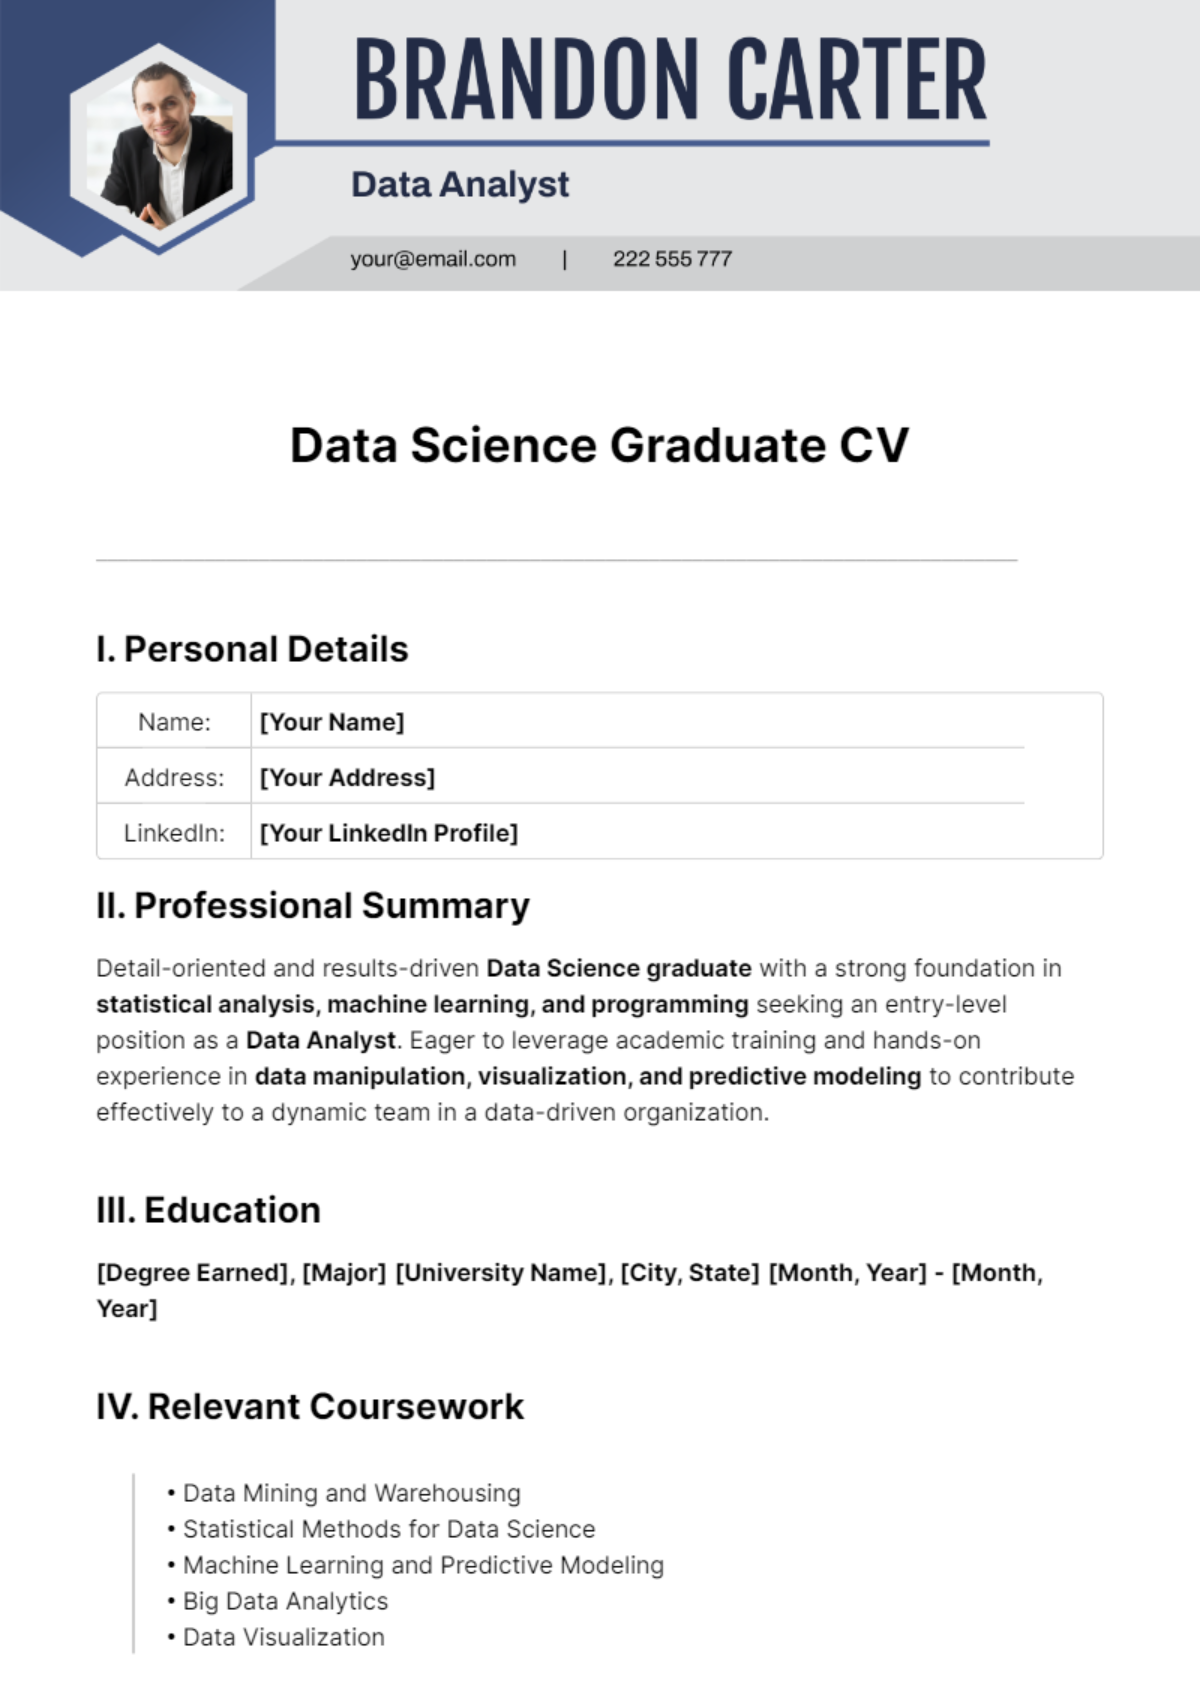 Data Science Graduate CV Template